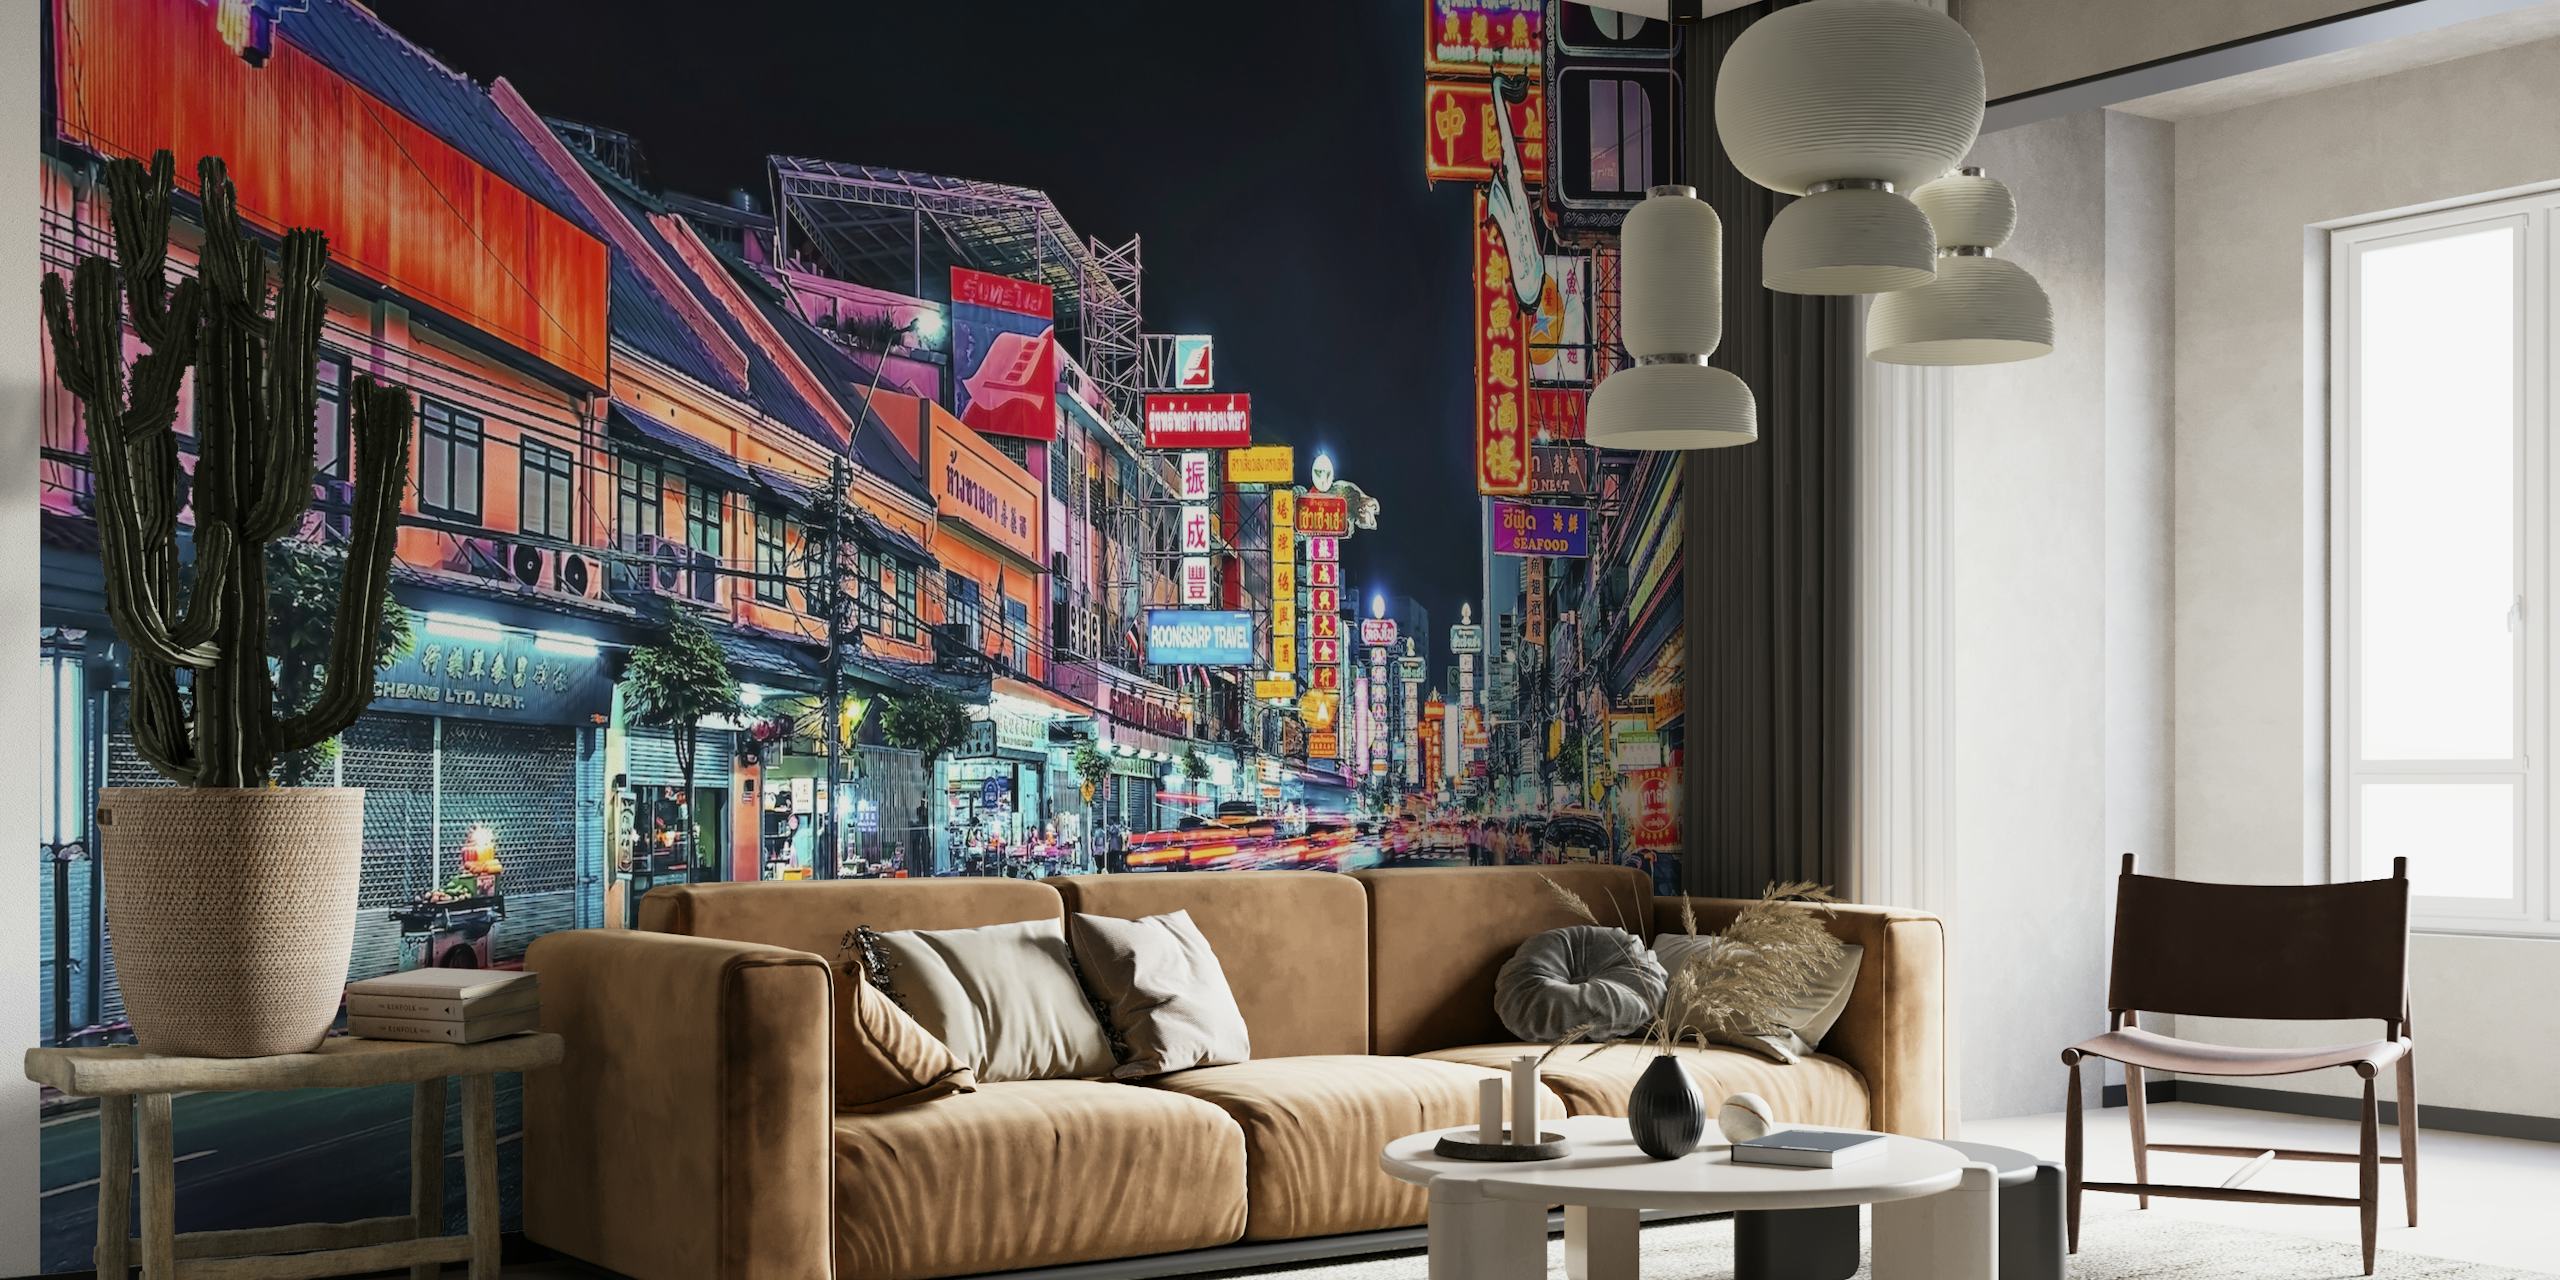 Chinatown By Night wallpaper